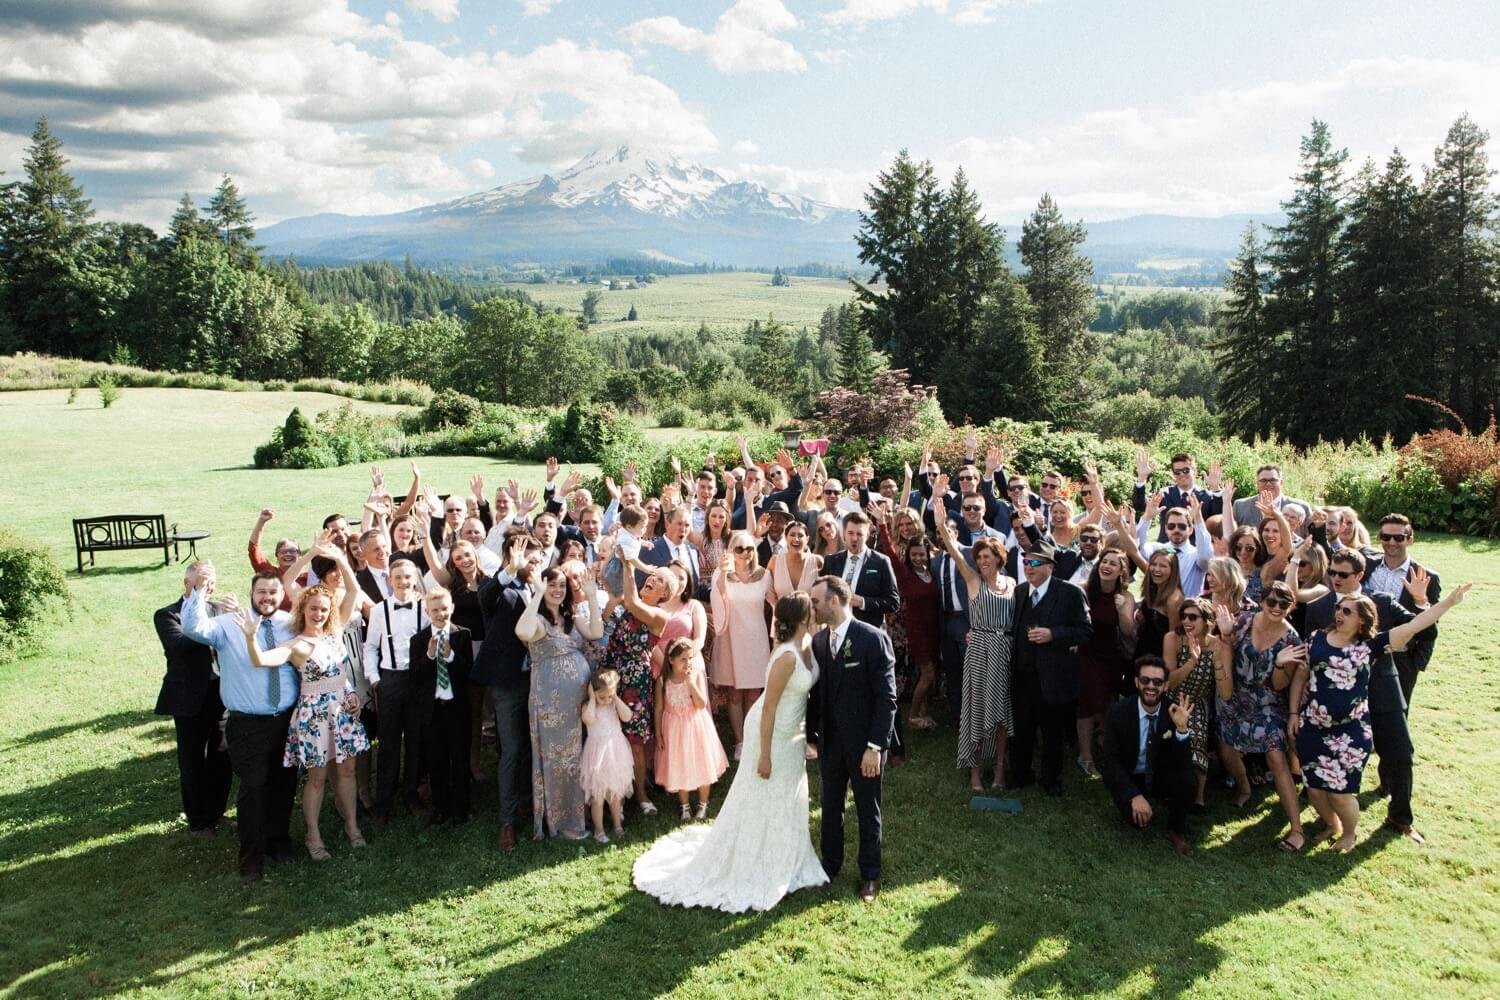 067_Mount Hood Organic Farms Wedding-Bride and groom kiss in front of cheering guests at mount hood wedding.jpg